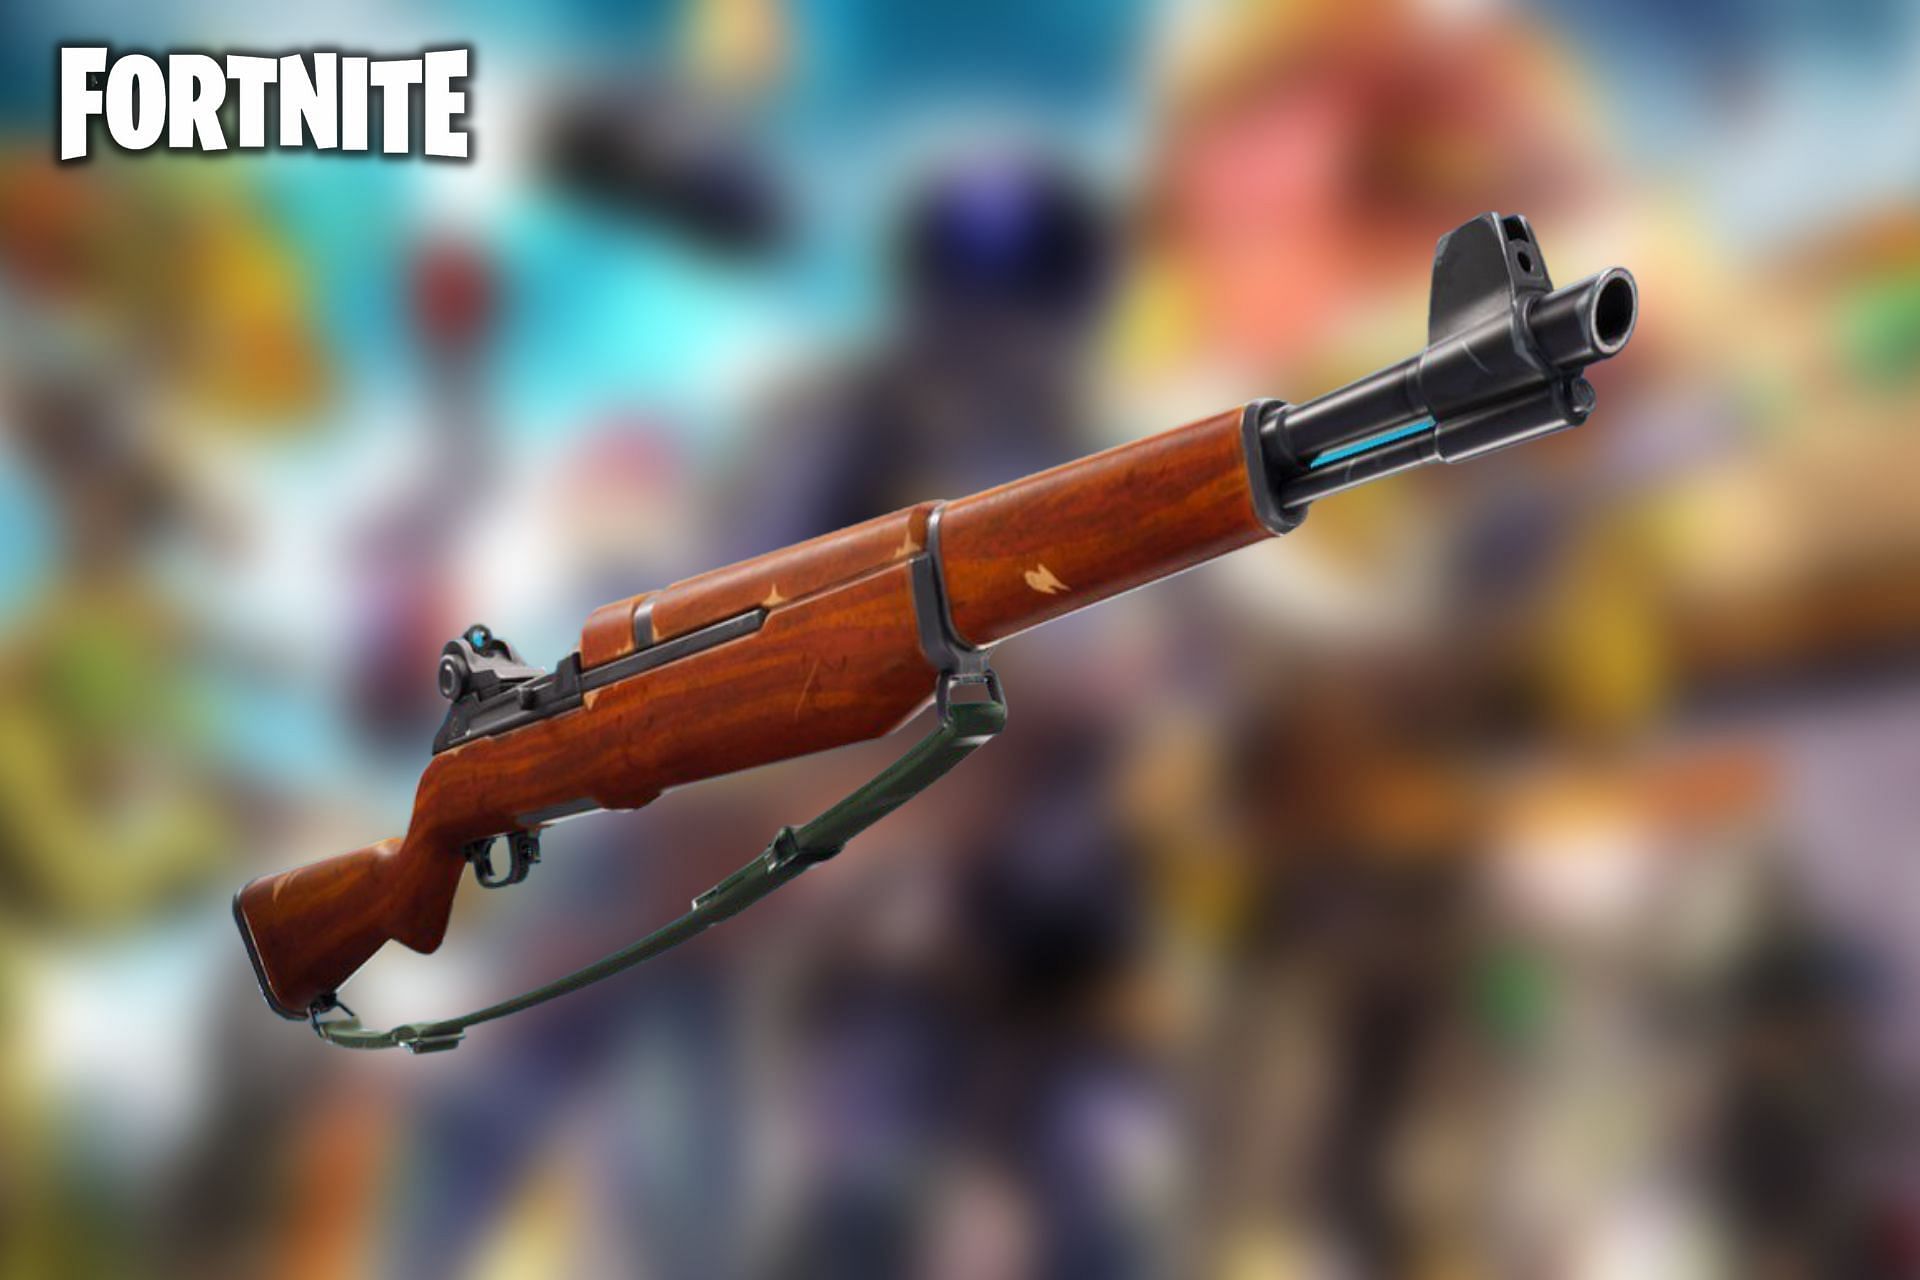 Combat Sniper Rifle was - Fortnite: Battle Royale Fans